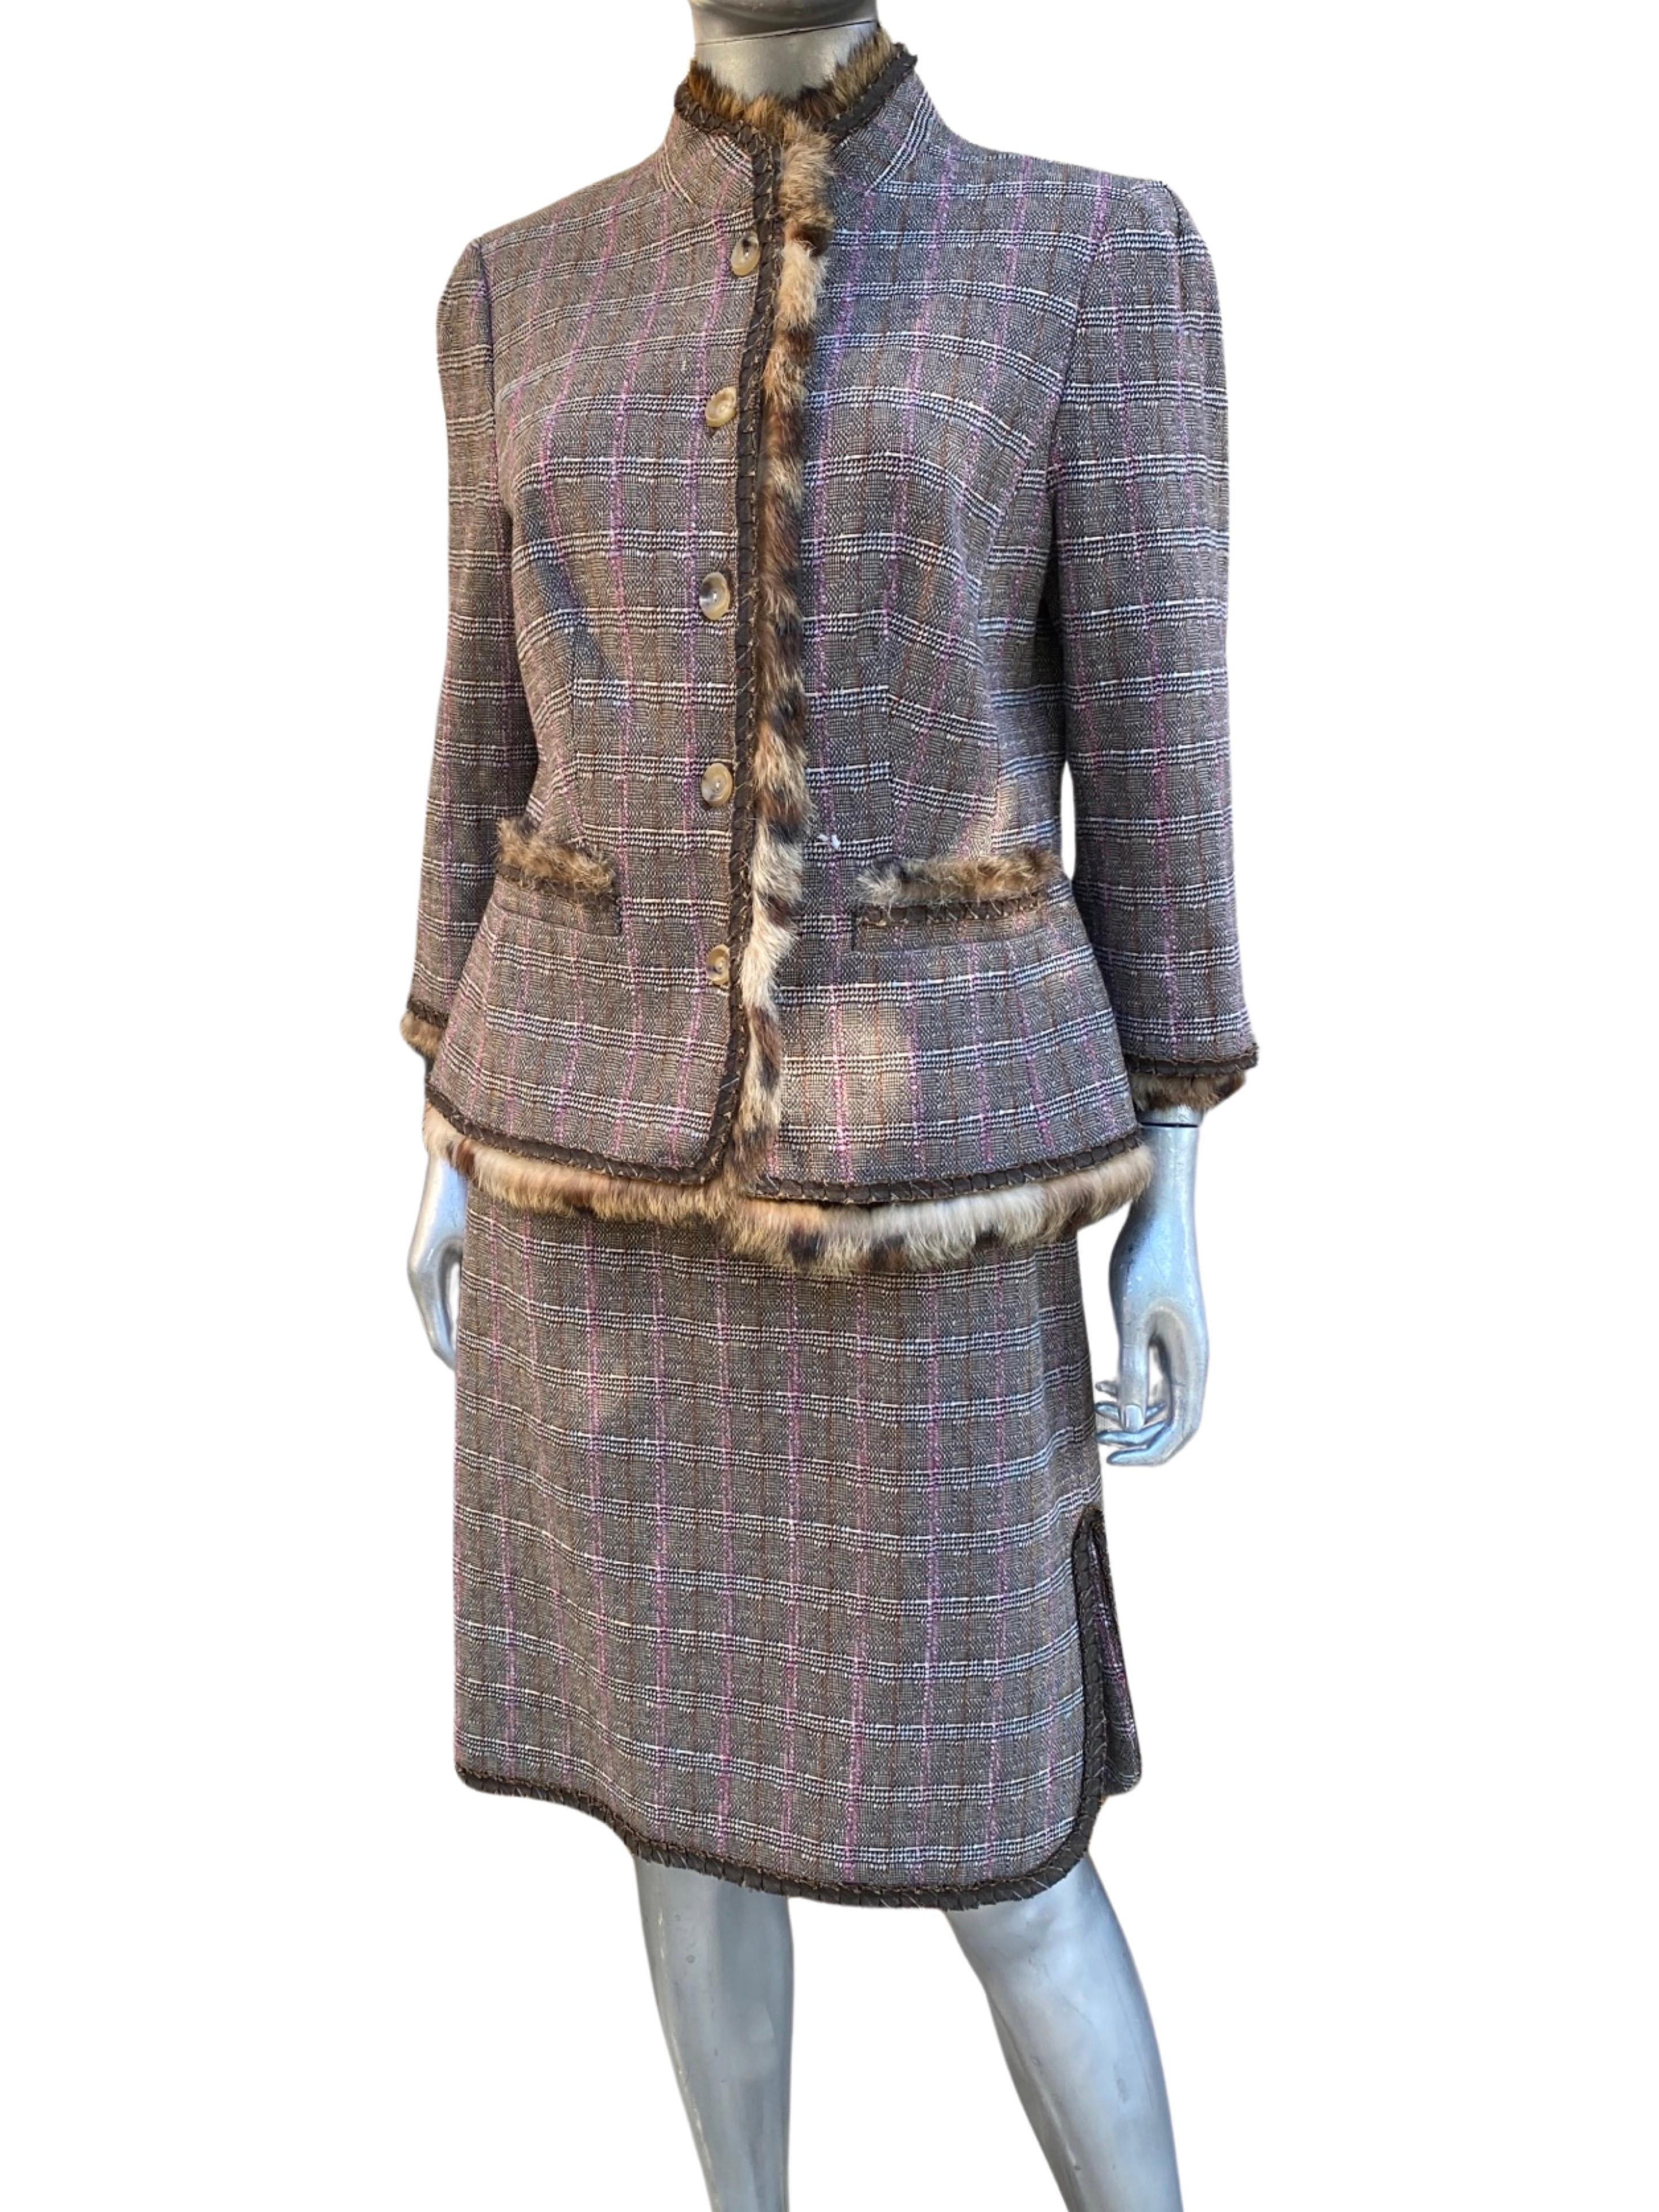 Worth New York Chic Brown/Lilac Plaid Suit w/  Fur Trim Jacket Size 10/12 For Sale 1